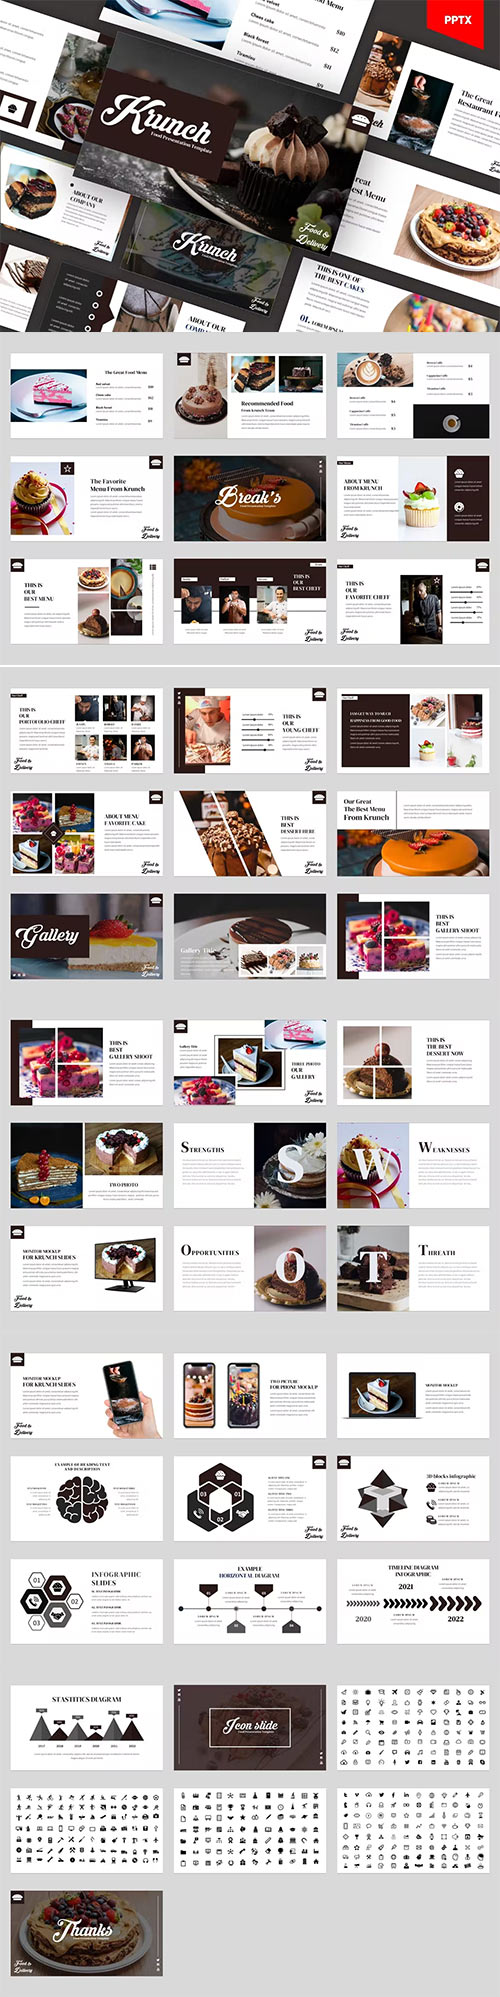 Krunch - Cake & Cookies Powerpoint Template